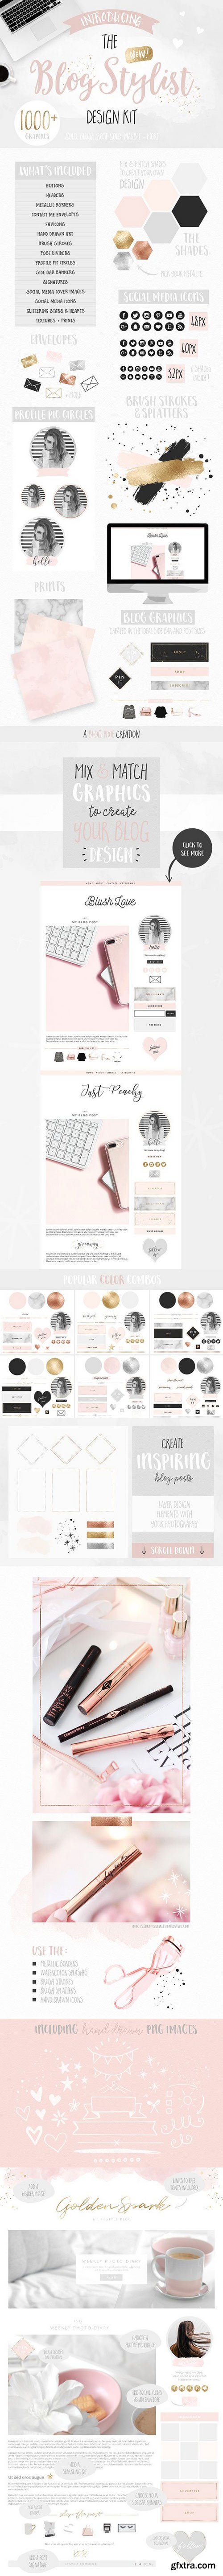 CM - Blog Stylist Design Kit 1481405